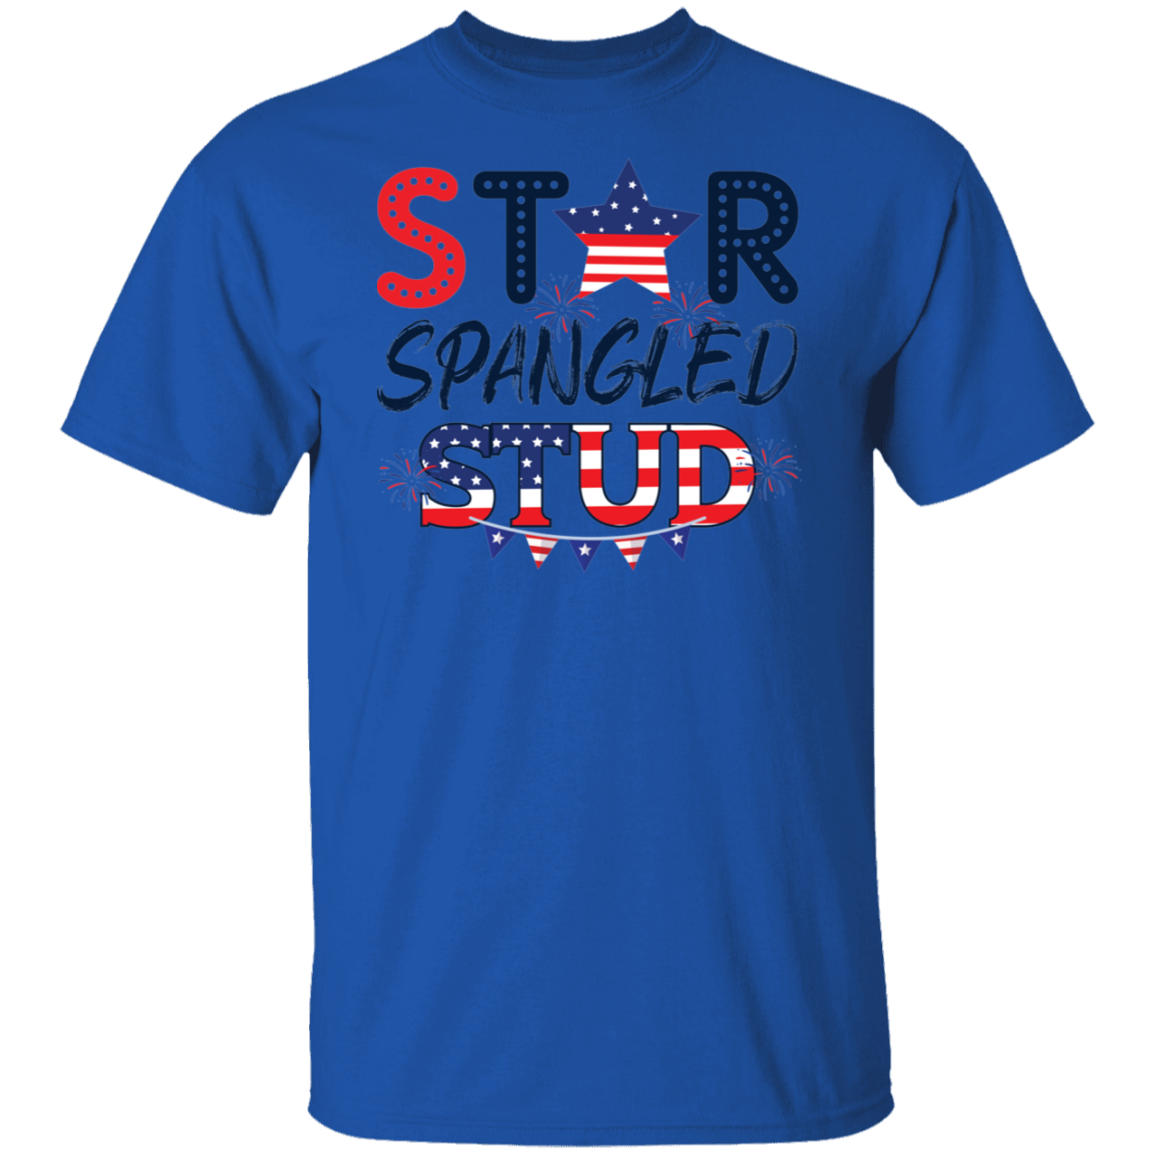 Star Spangled Stud | short sleeve premium 5.3 oz. T-Shirt